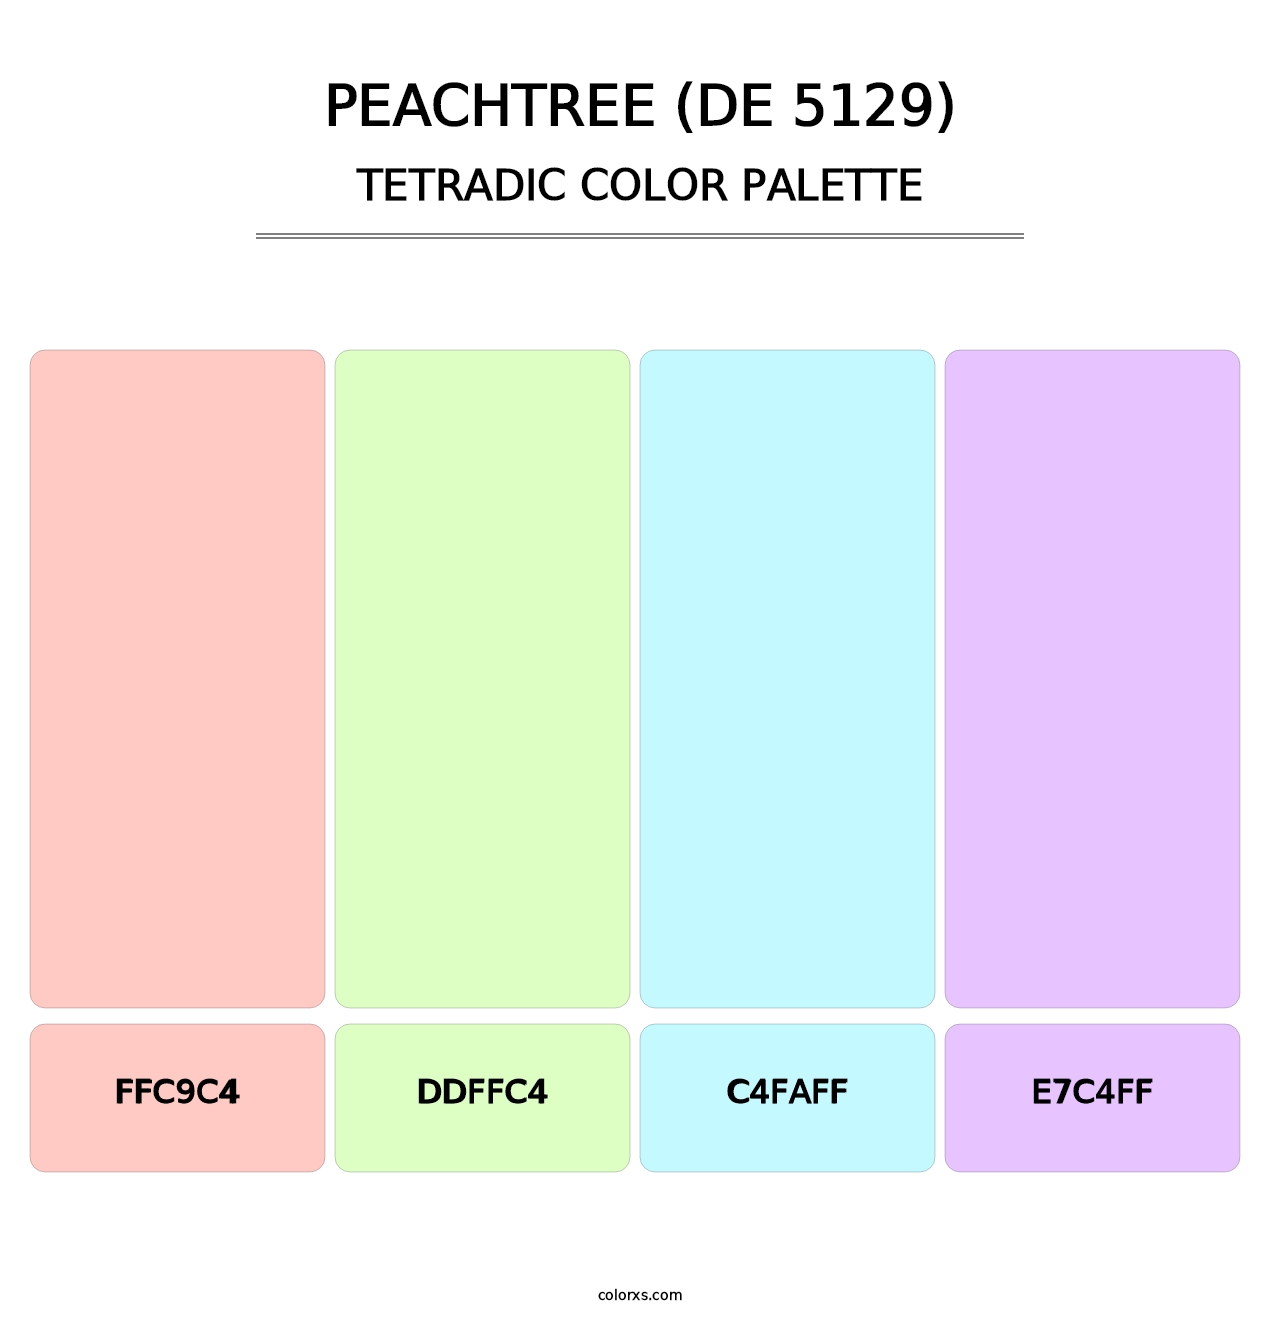 Peachtree (DE 5129) - Tetradic Color Palette